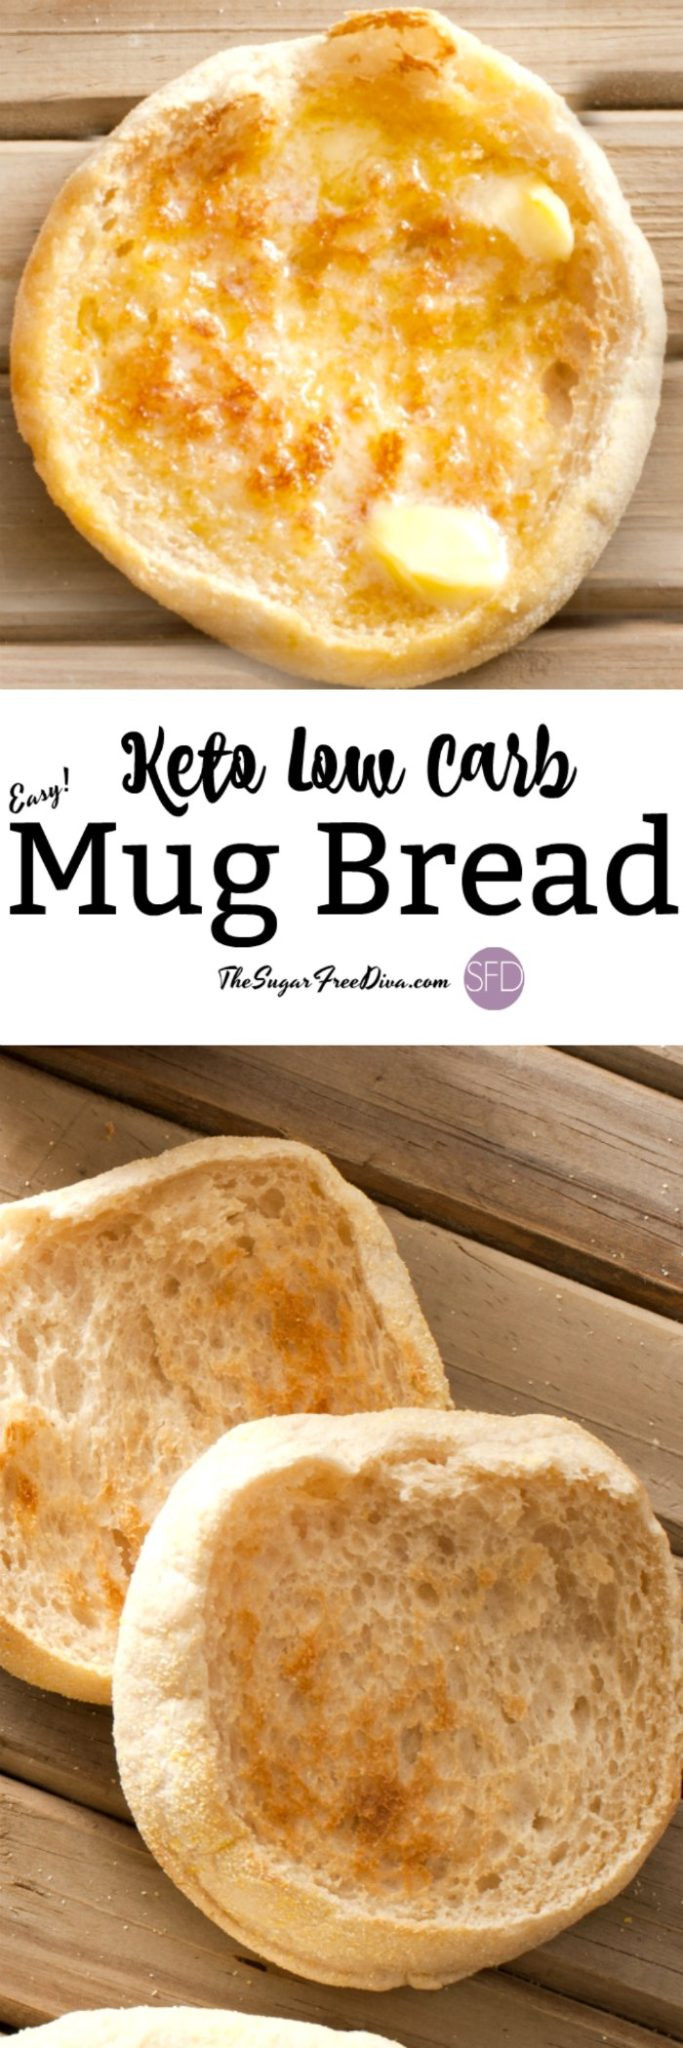 Easy Keto Bread Recipes
 Easy and Yummy Keto Low Carb Mug Bread Recipe